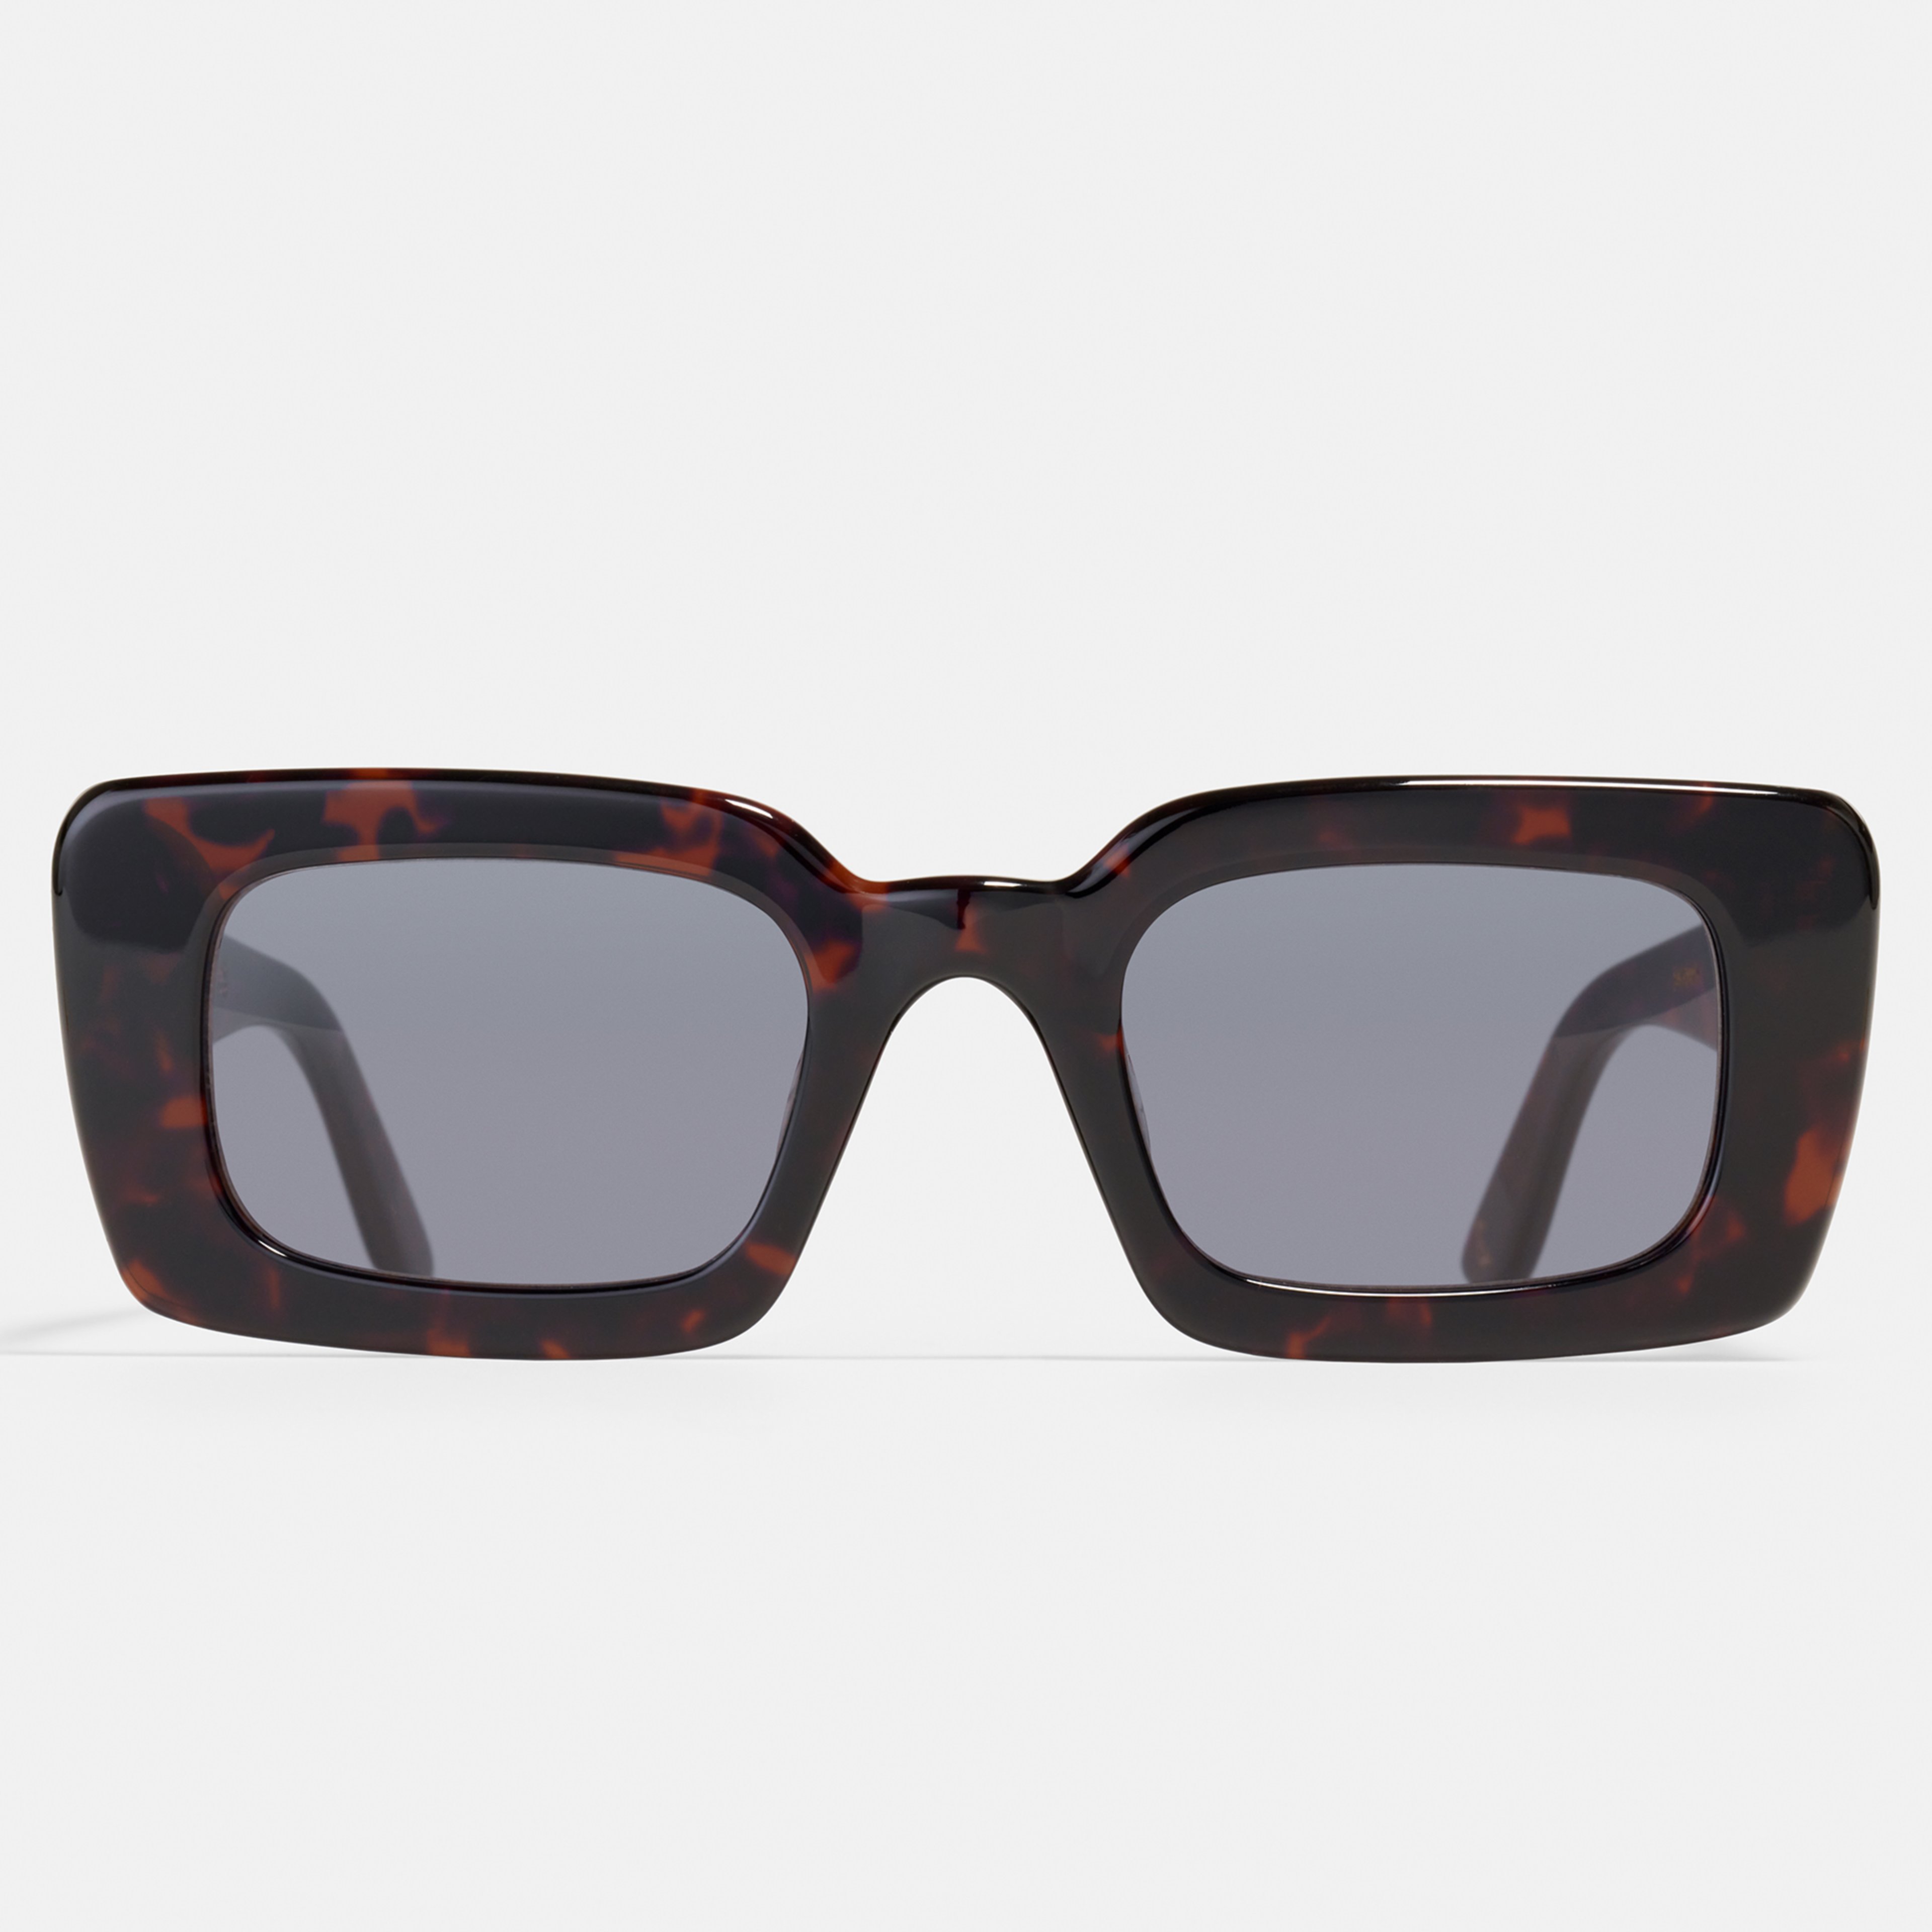 Ace & Tate Sunglasses | rectangle Acetate in tortoise